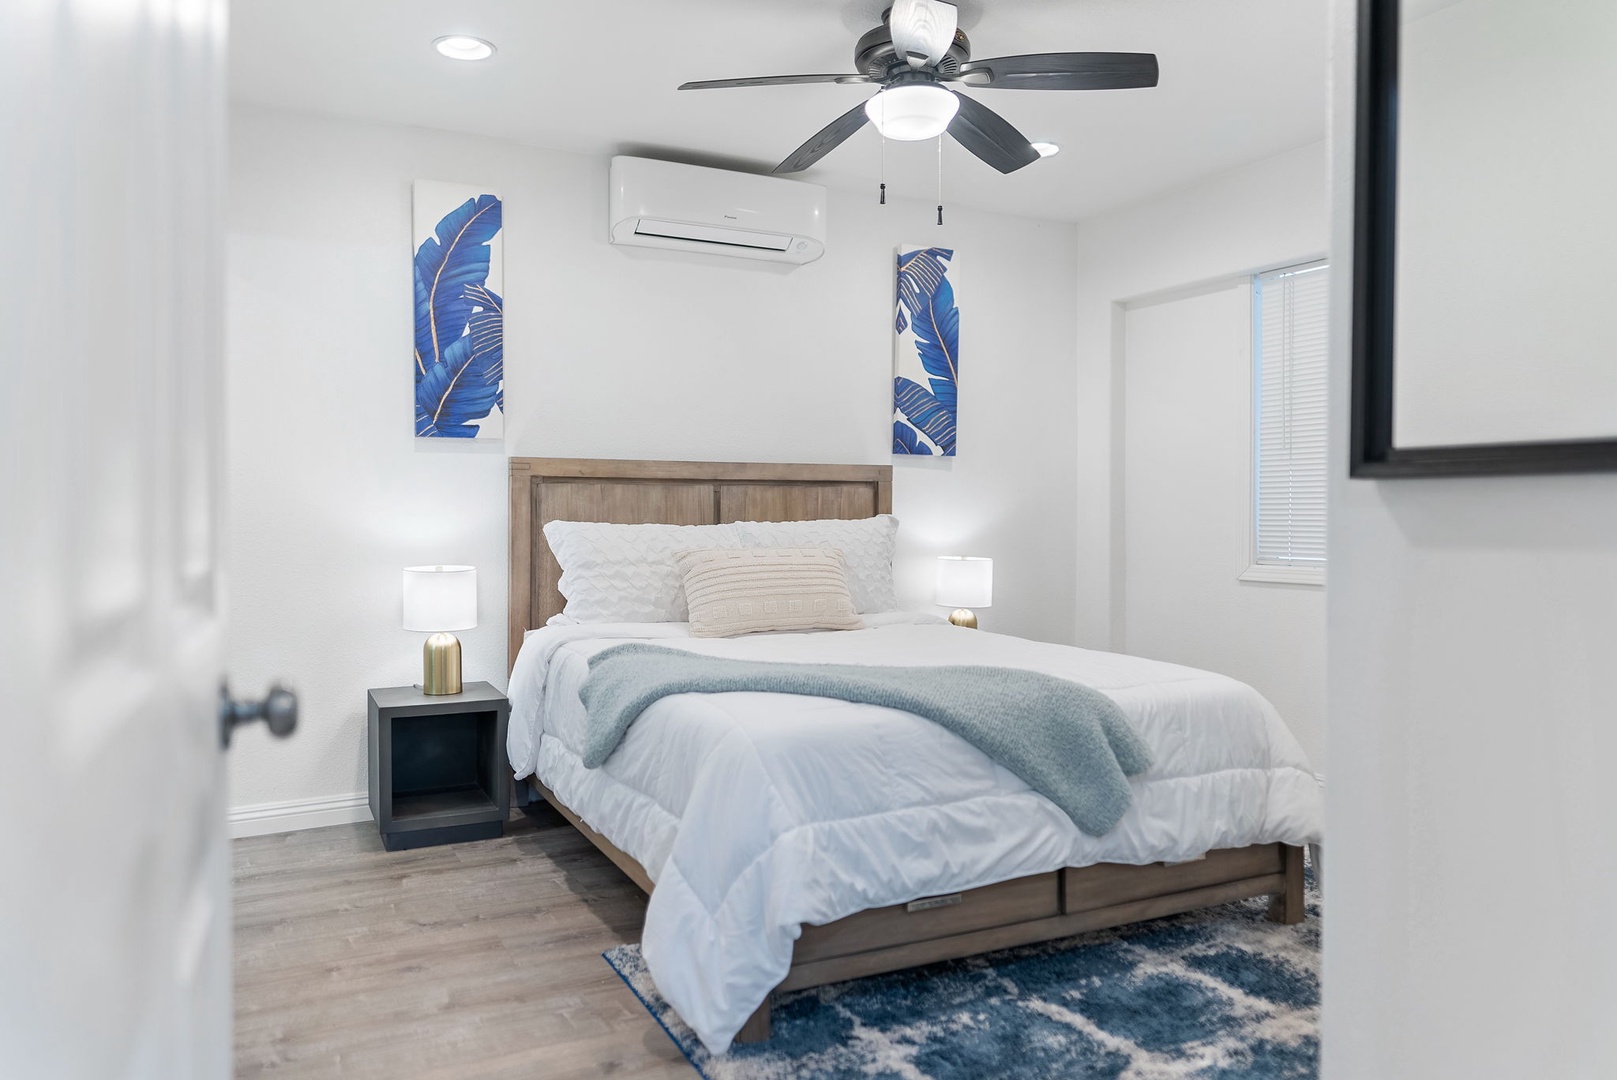 Kaaawa Vacation Rentals, Kualoa Ohia - Bedroom 3 with ceiling fan and split A/C